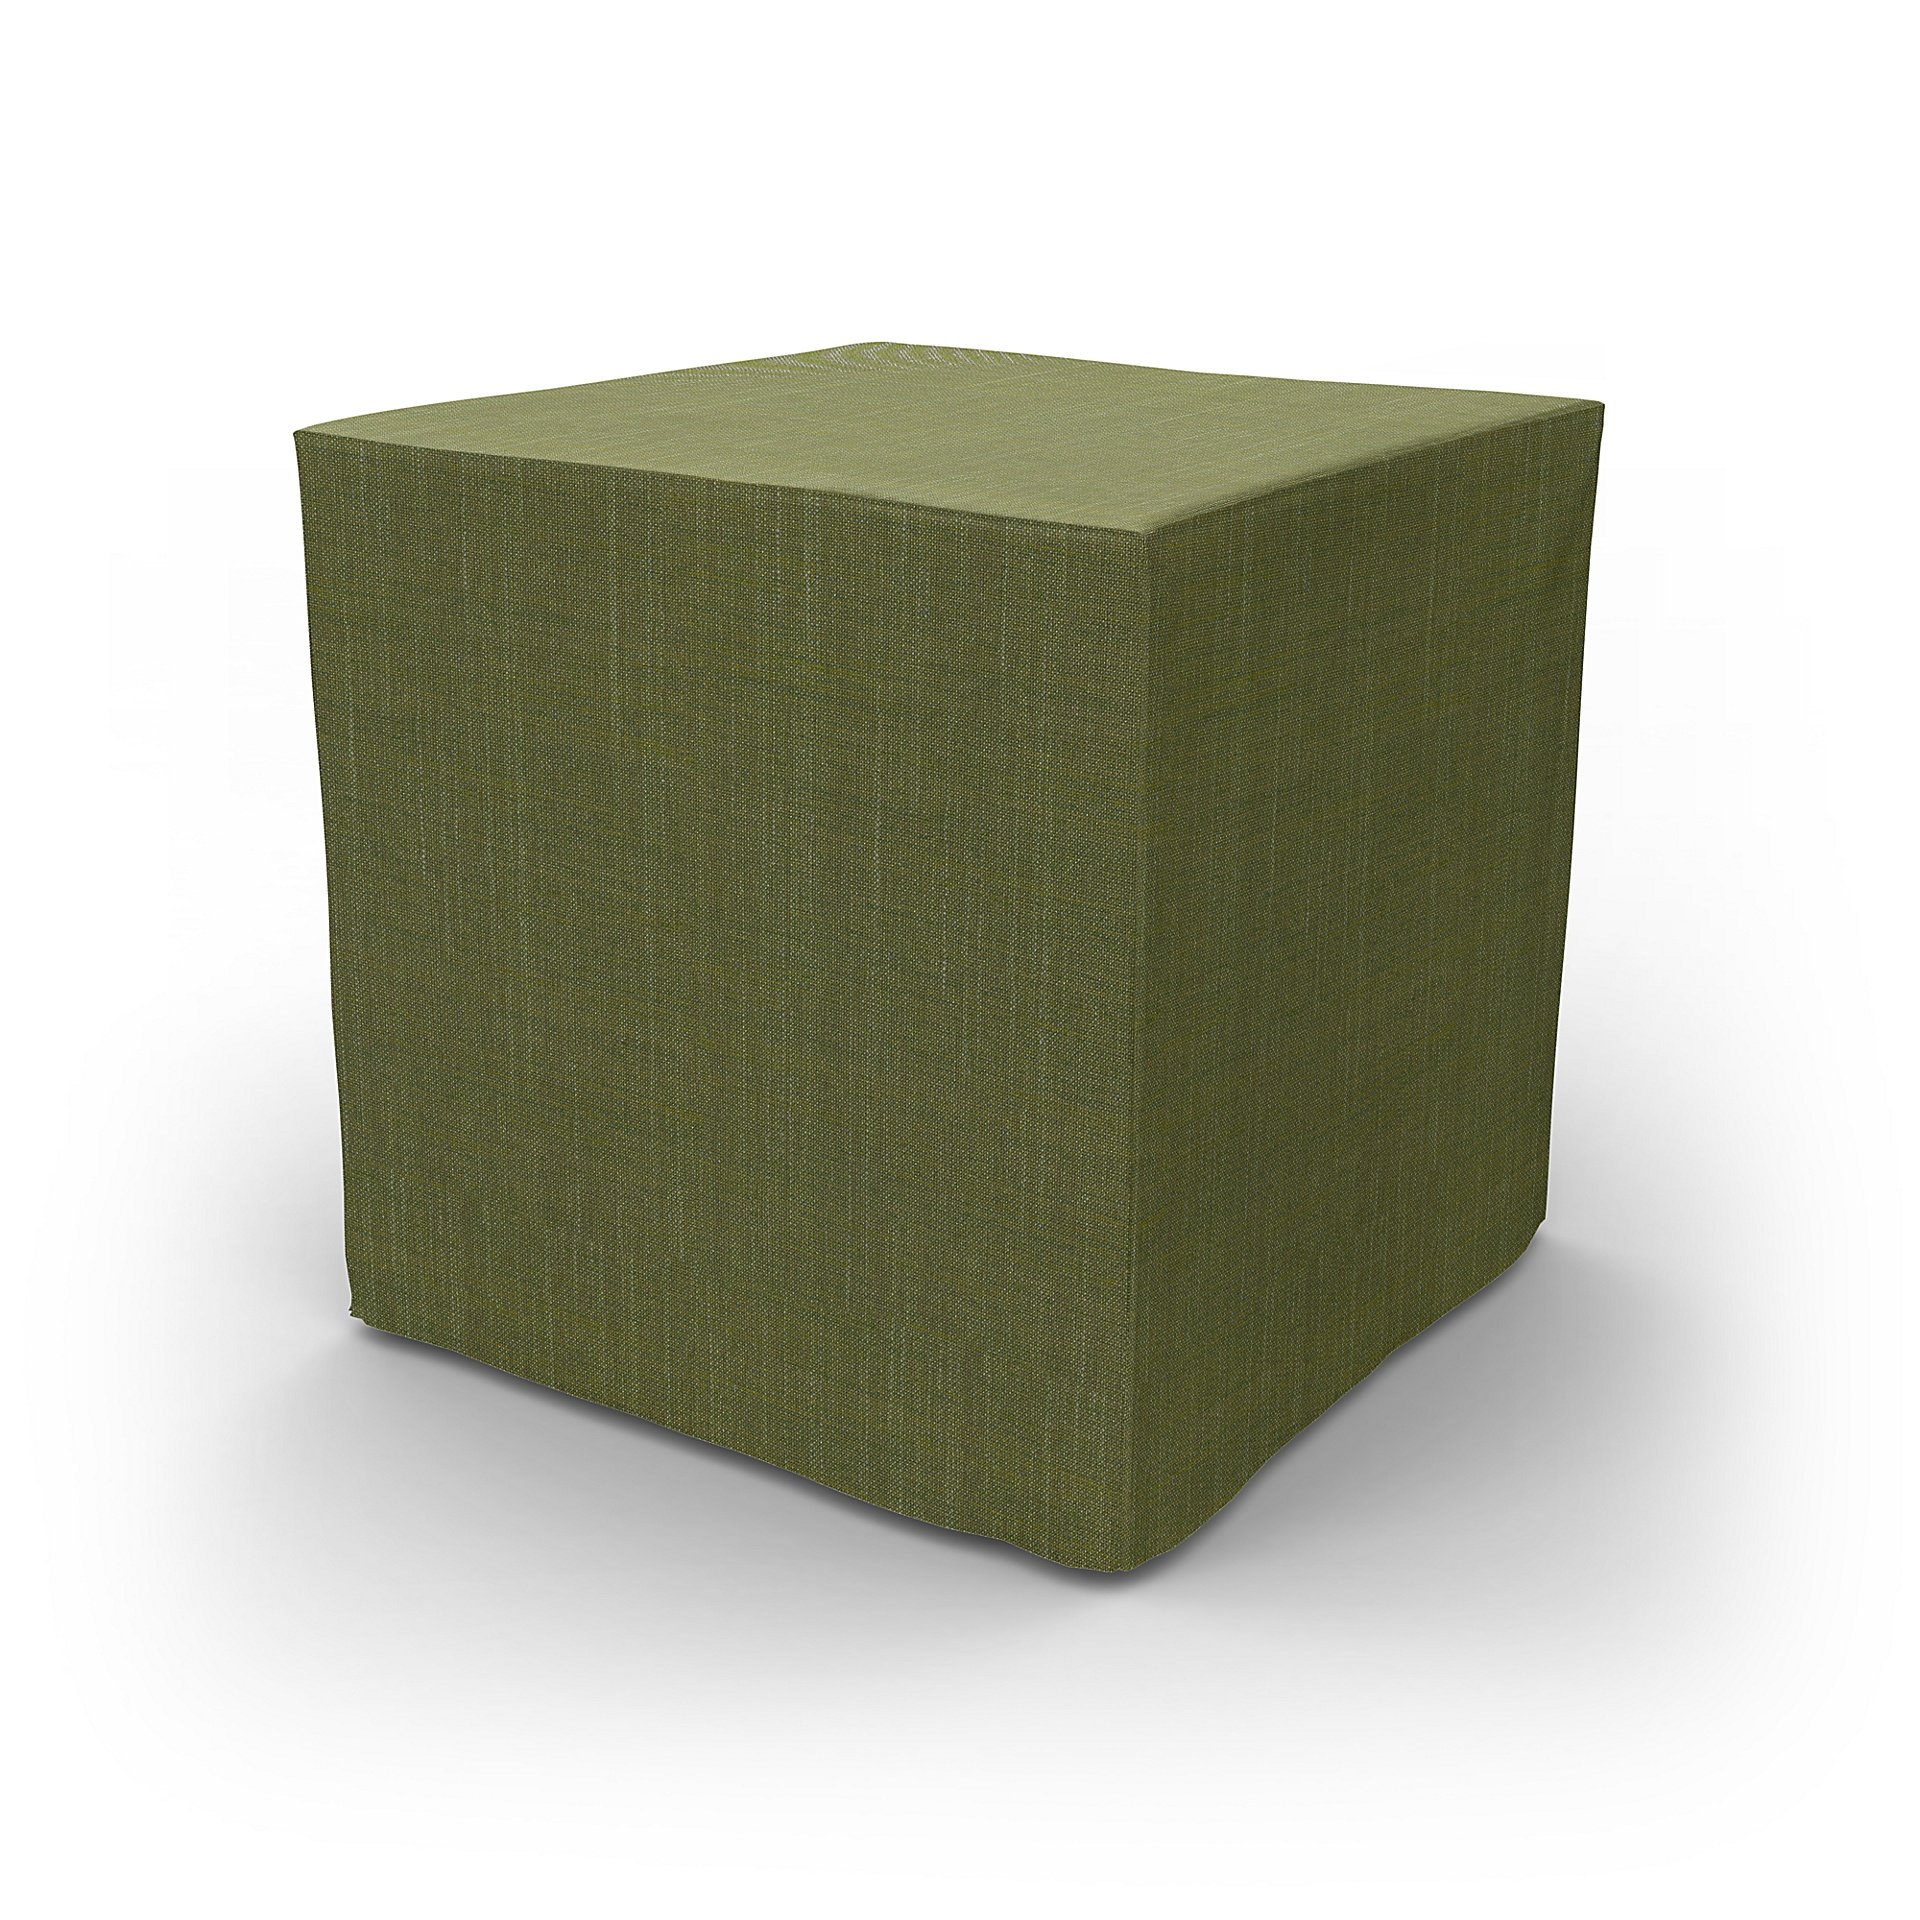 IKEA - Pallbo Footstool Cover, Moss Green, Boucle & Texture - Bemz